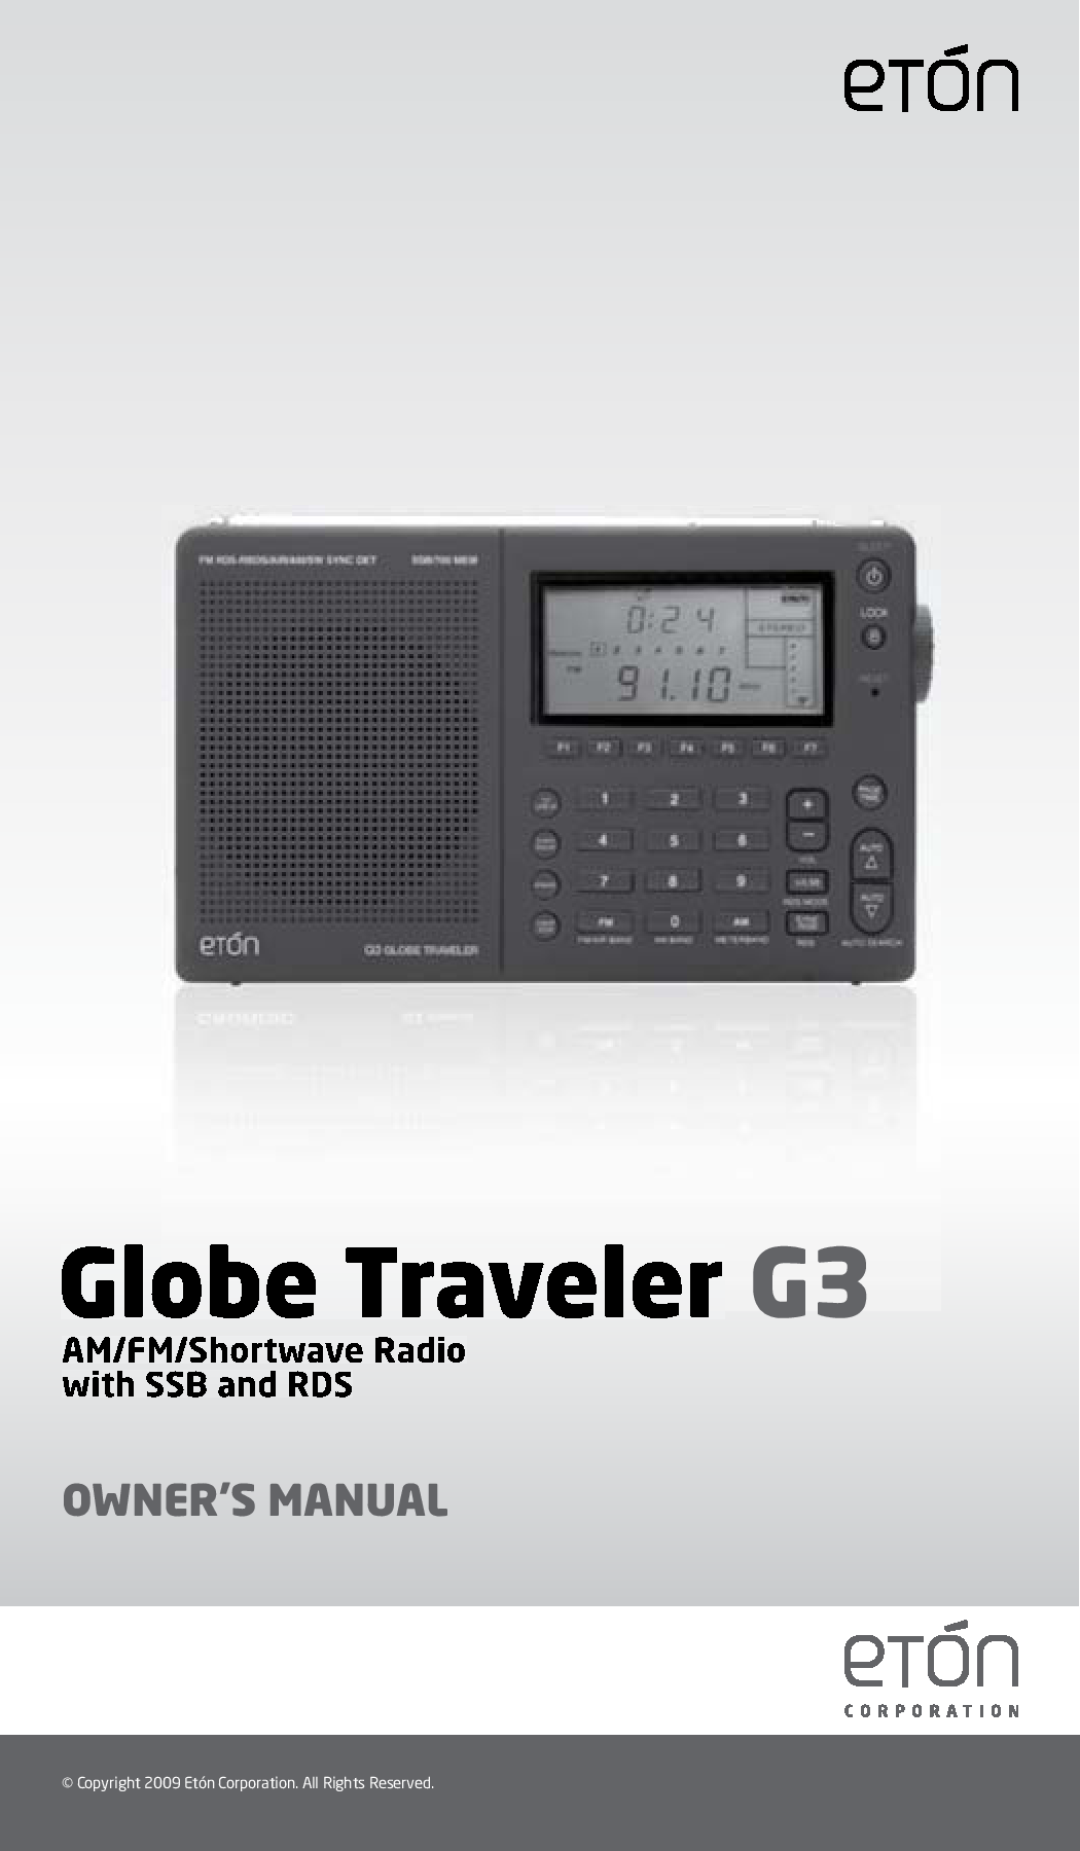 Eton owner manual Globe Traveler G3, Owner’S Manual, AM/FM/Shortwave Radio with SSB and RDS 